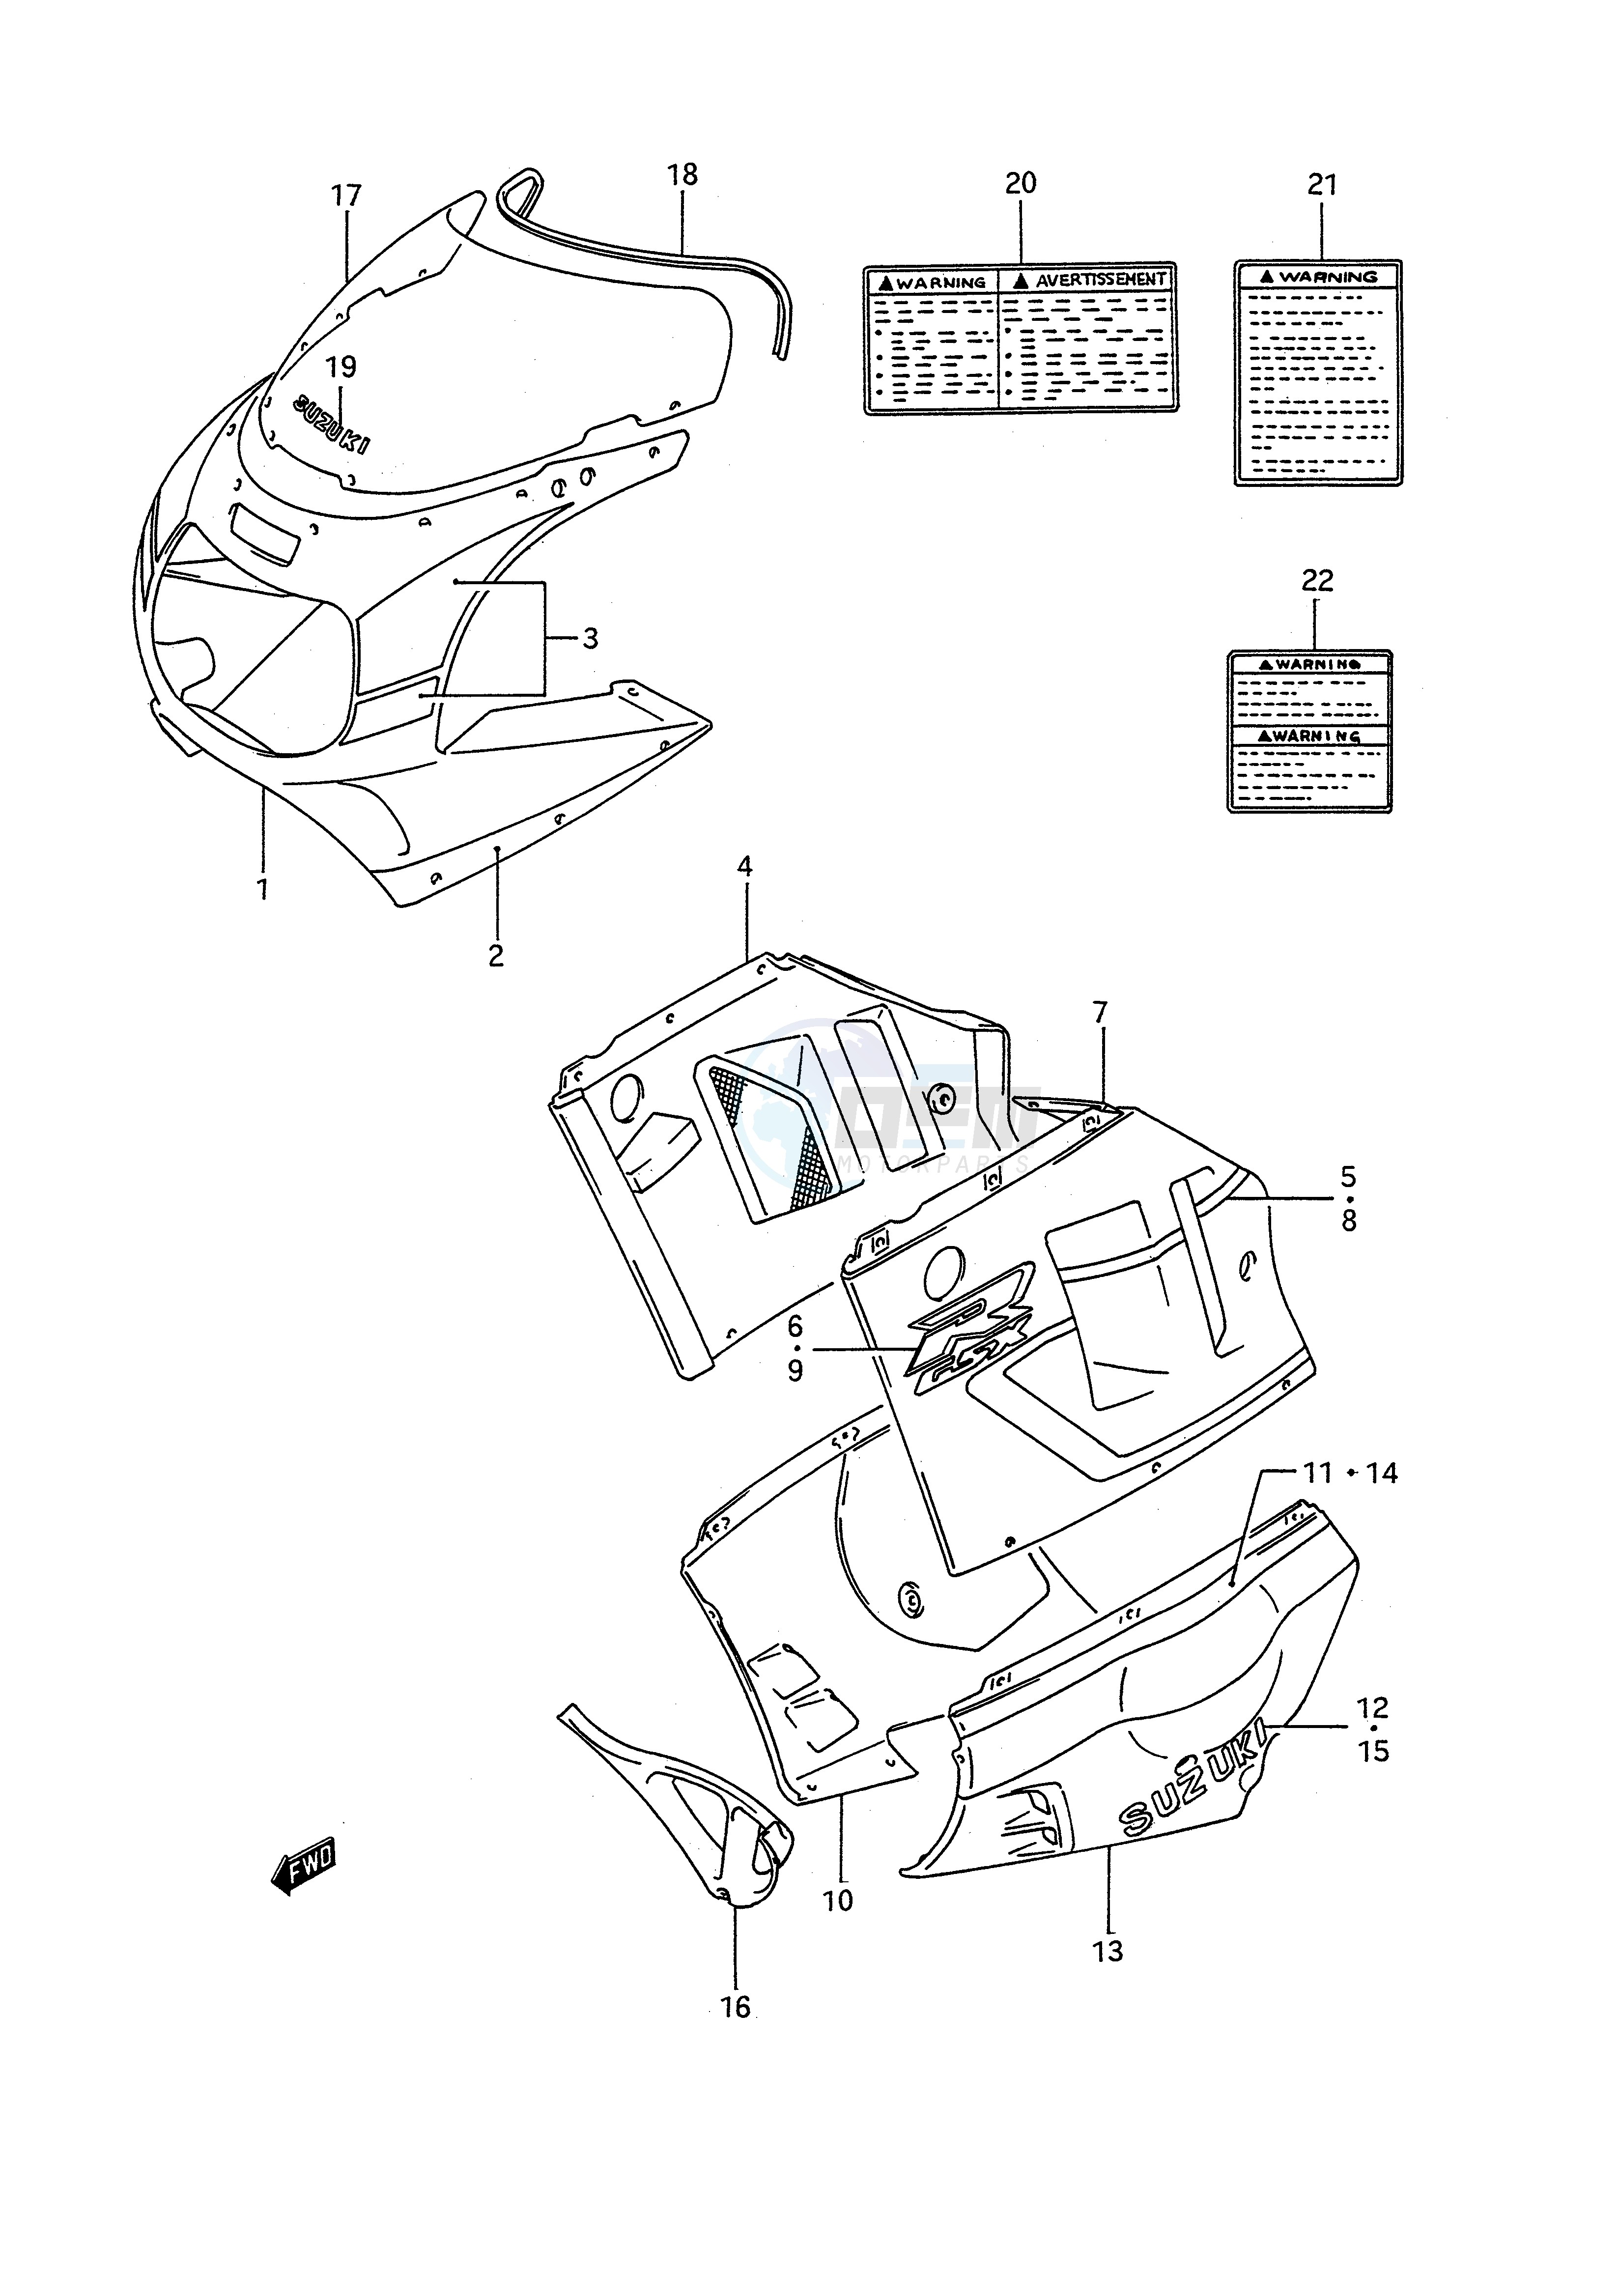 COWLING BODY (MODEL M 3SL) blueprint